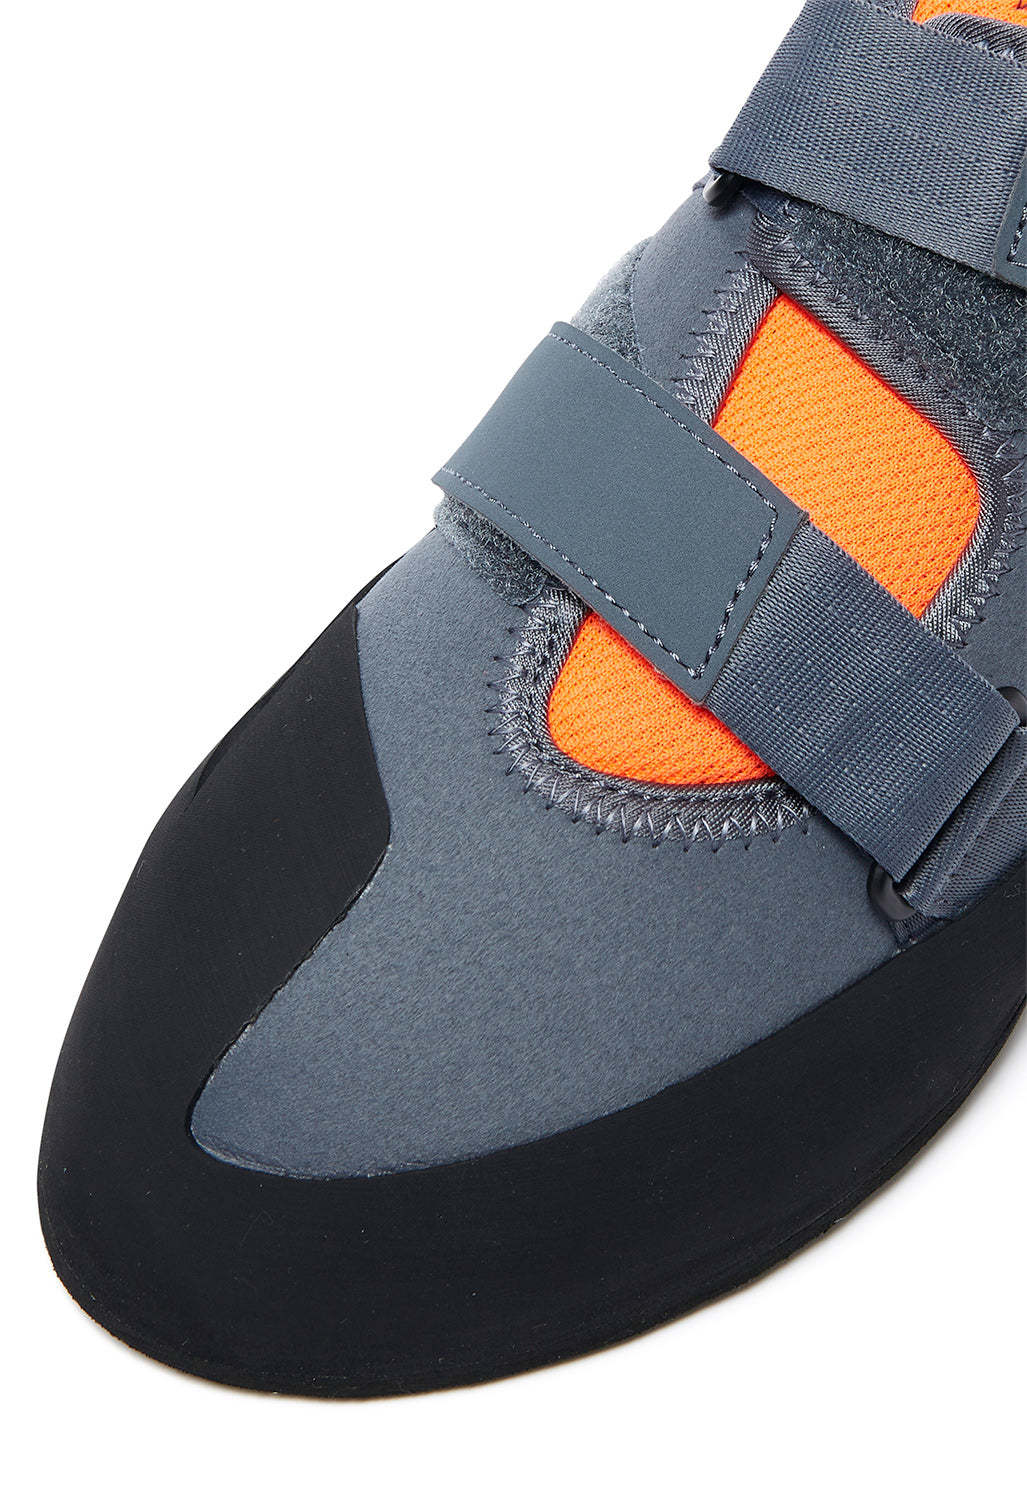 adidas Five Ten Kirigami Men's Shoes - Onix/Core Black/Solar Red